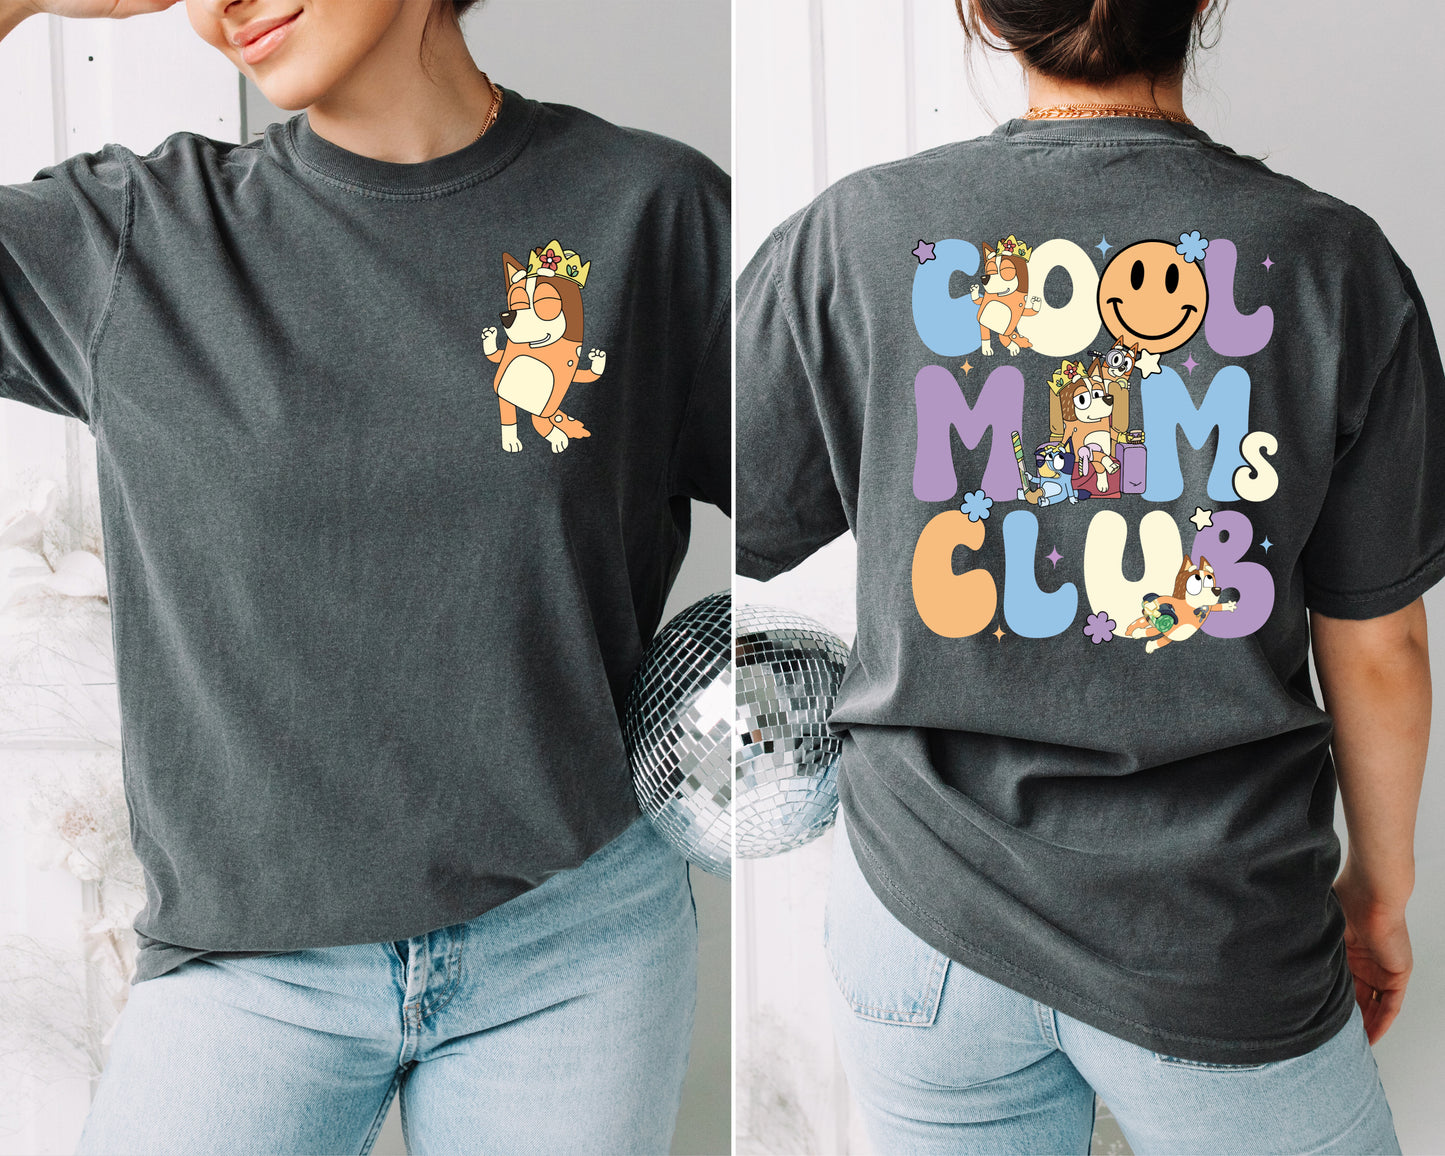 Chili Cool Moms Club